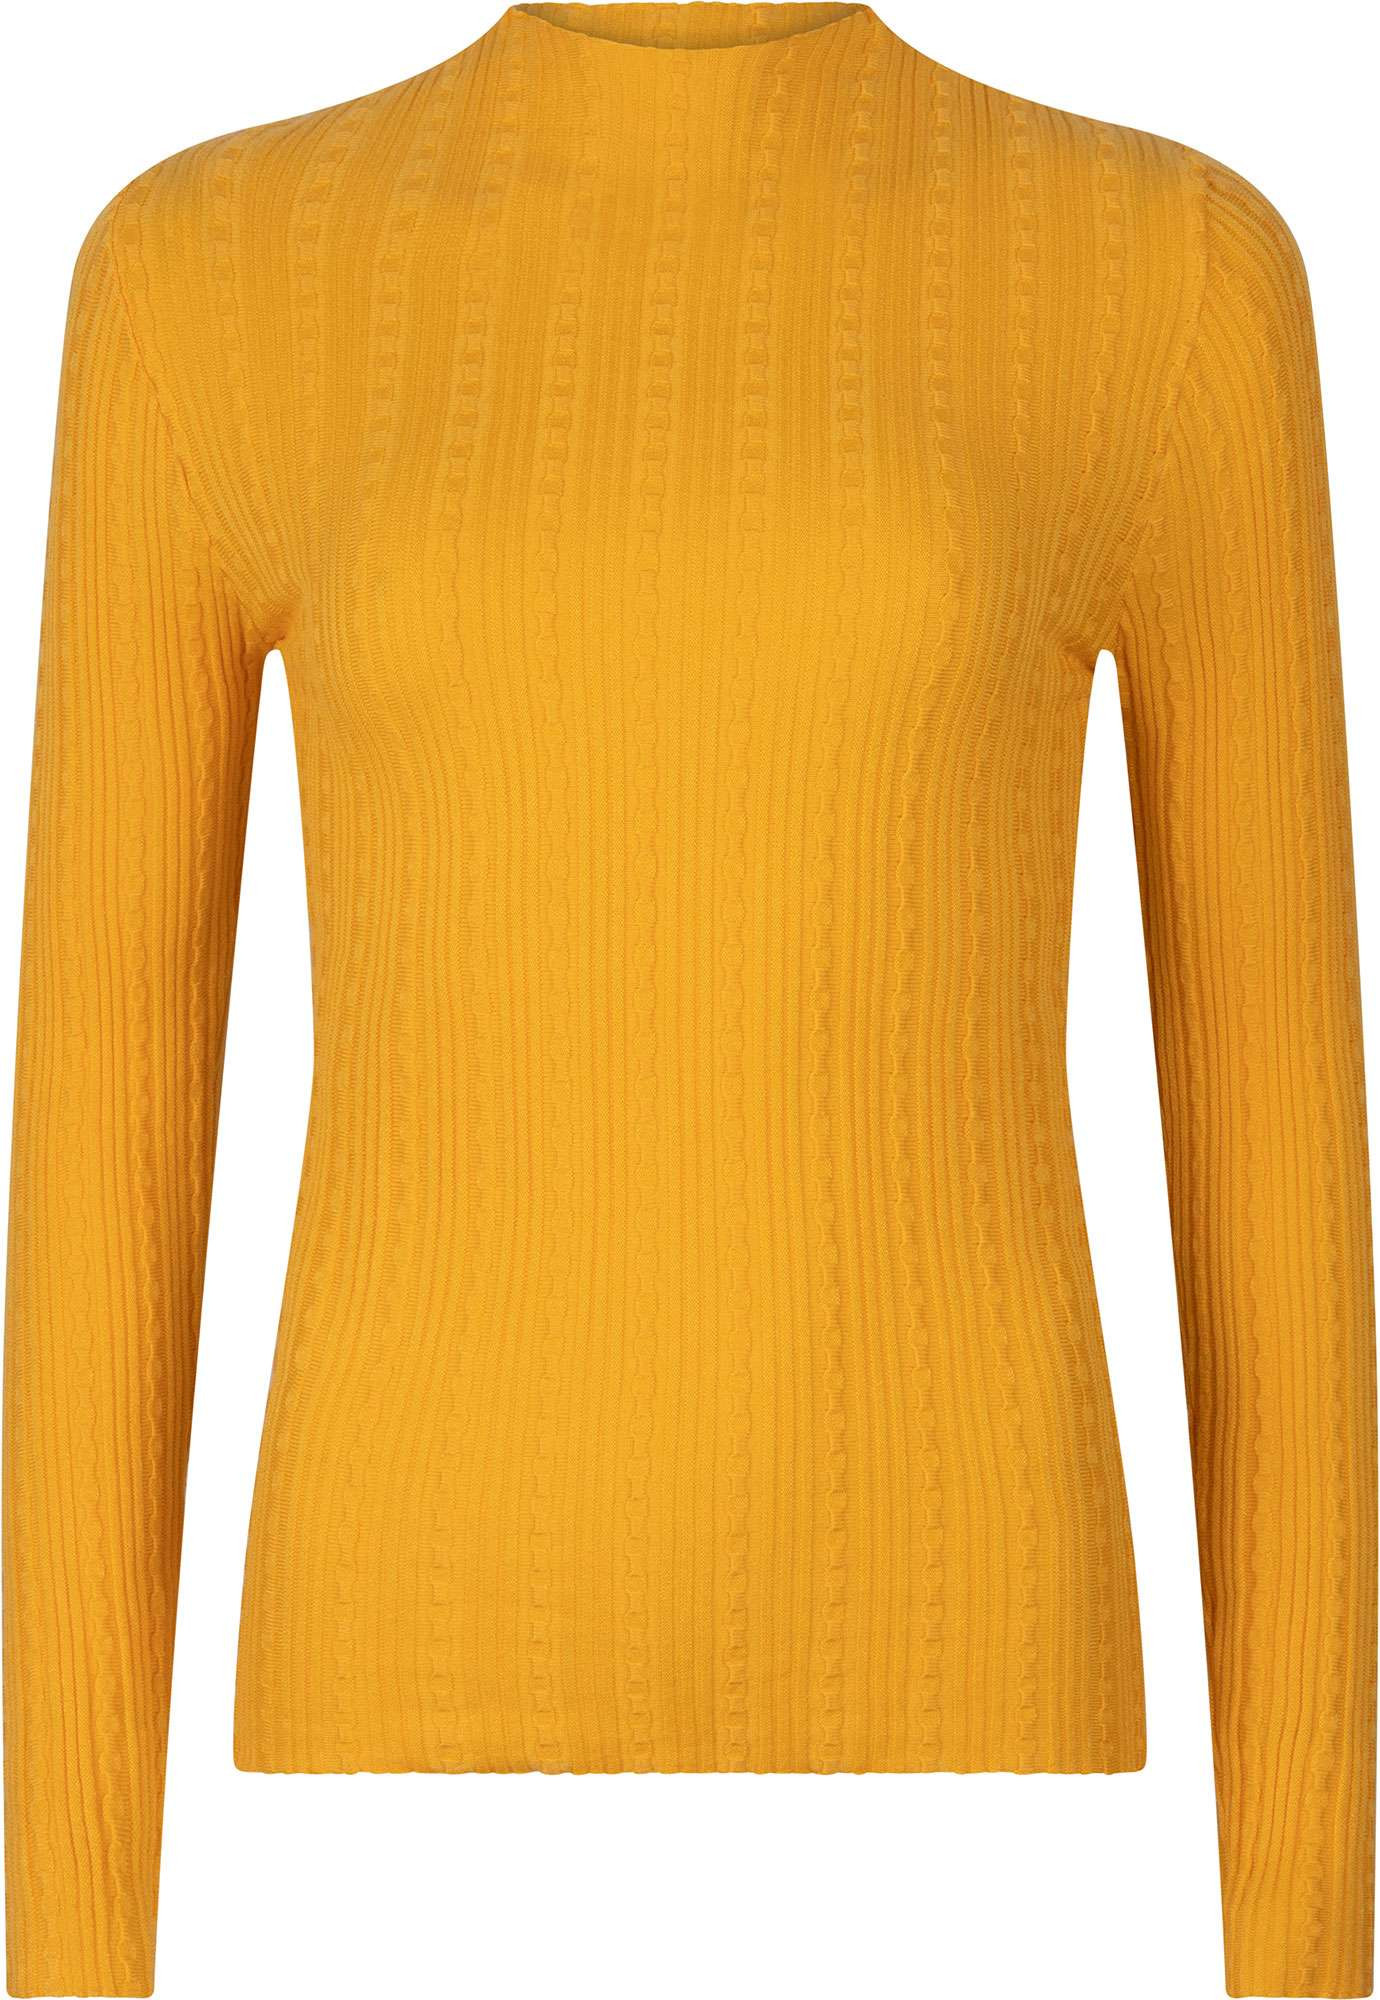 Afbeelding van Lofty Manner Sweater top chrissy yellow